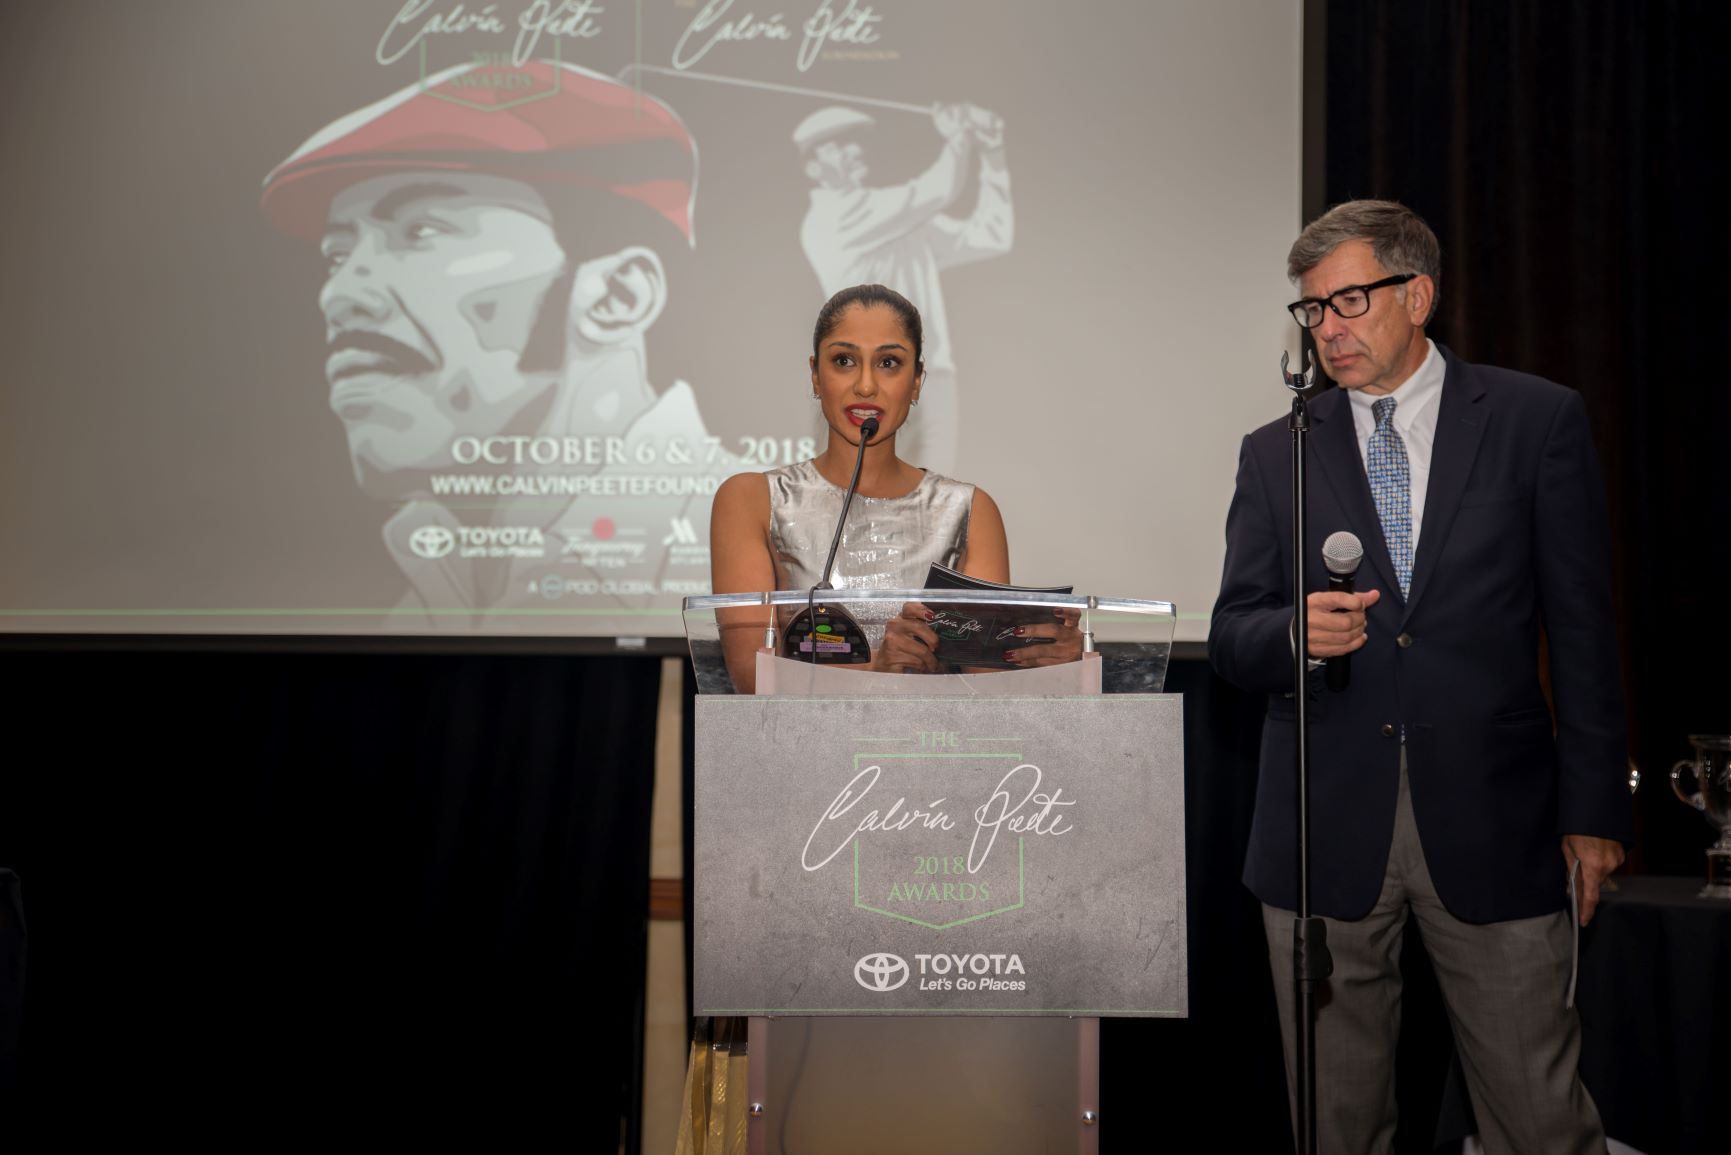 Hosts Seema Sadekar and Mark Winne make opening remarks at The 2018 Calvin Peete Awards at Marriott Buckhead Atlanta on October 6th